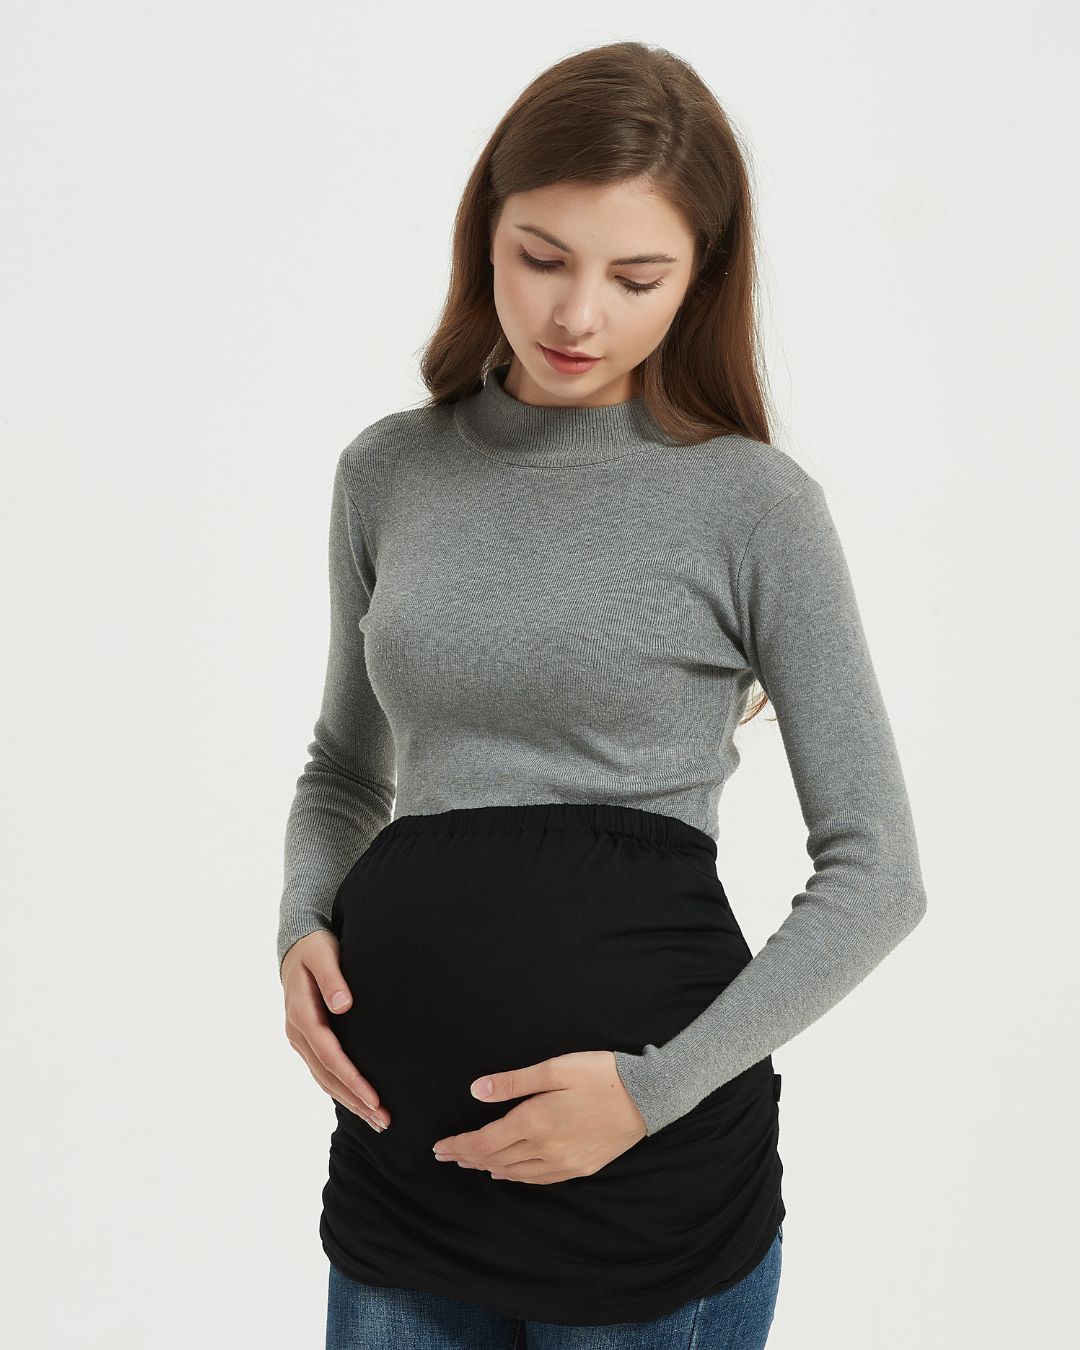 Black anti-wave pregnancy belly band